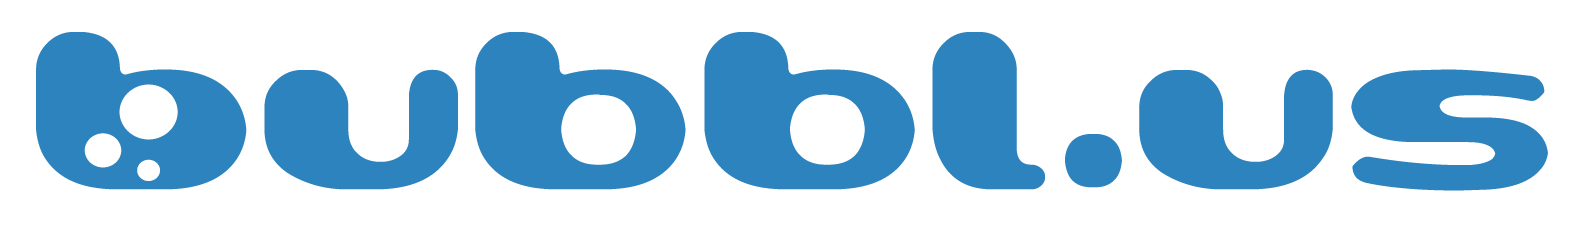 Bubbl.us Logo - Press kit - Bubbl.us Help